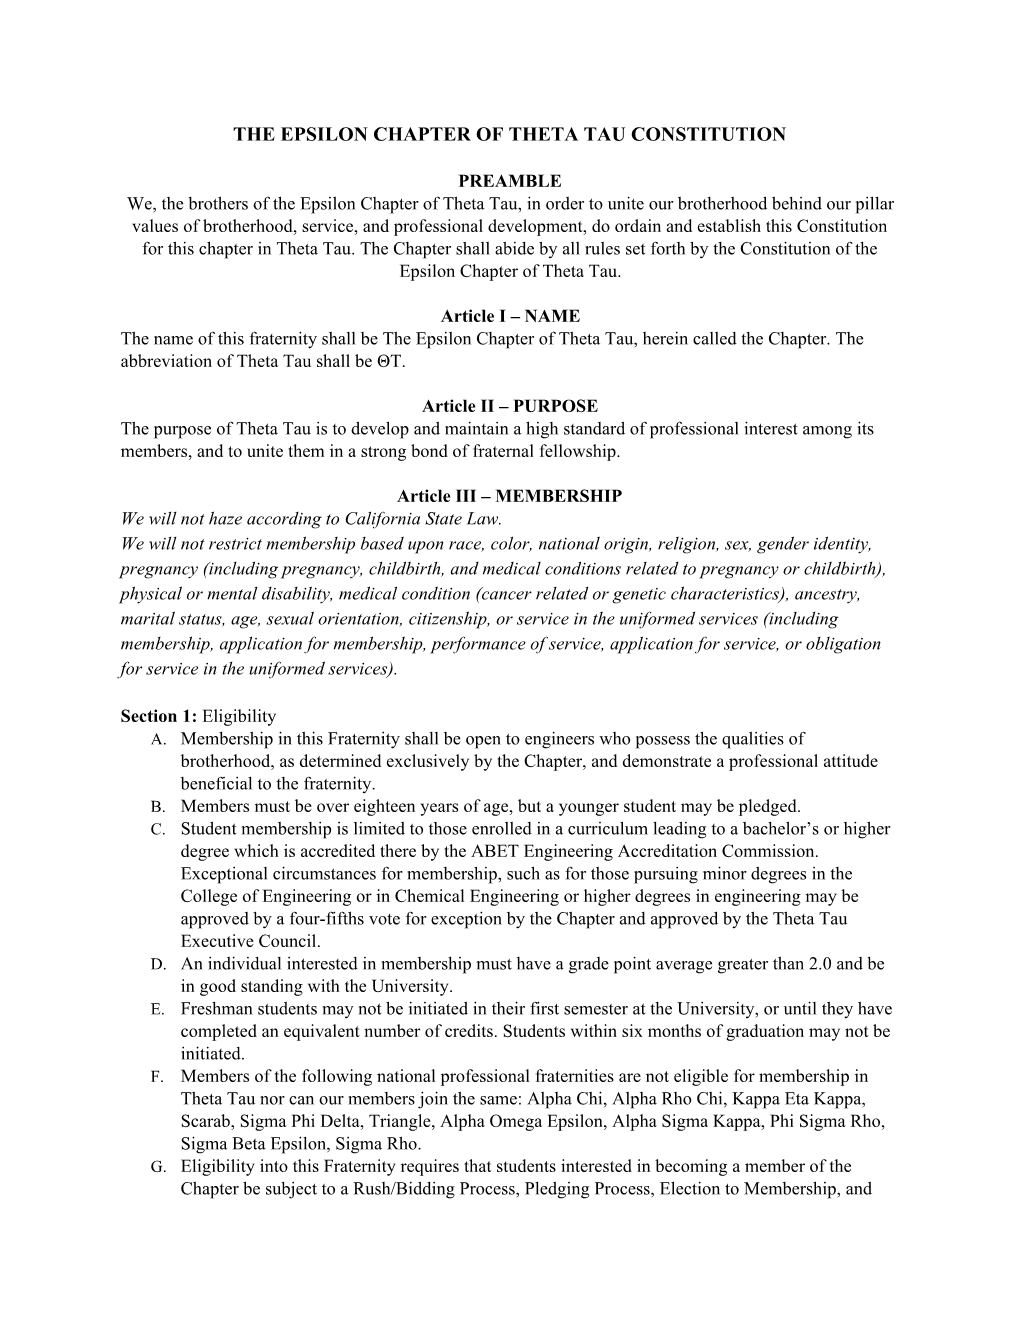 The Epsilon Chapter of Theta Tau Constitution